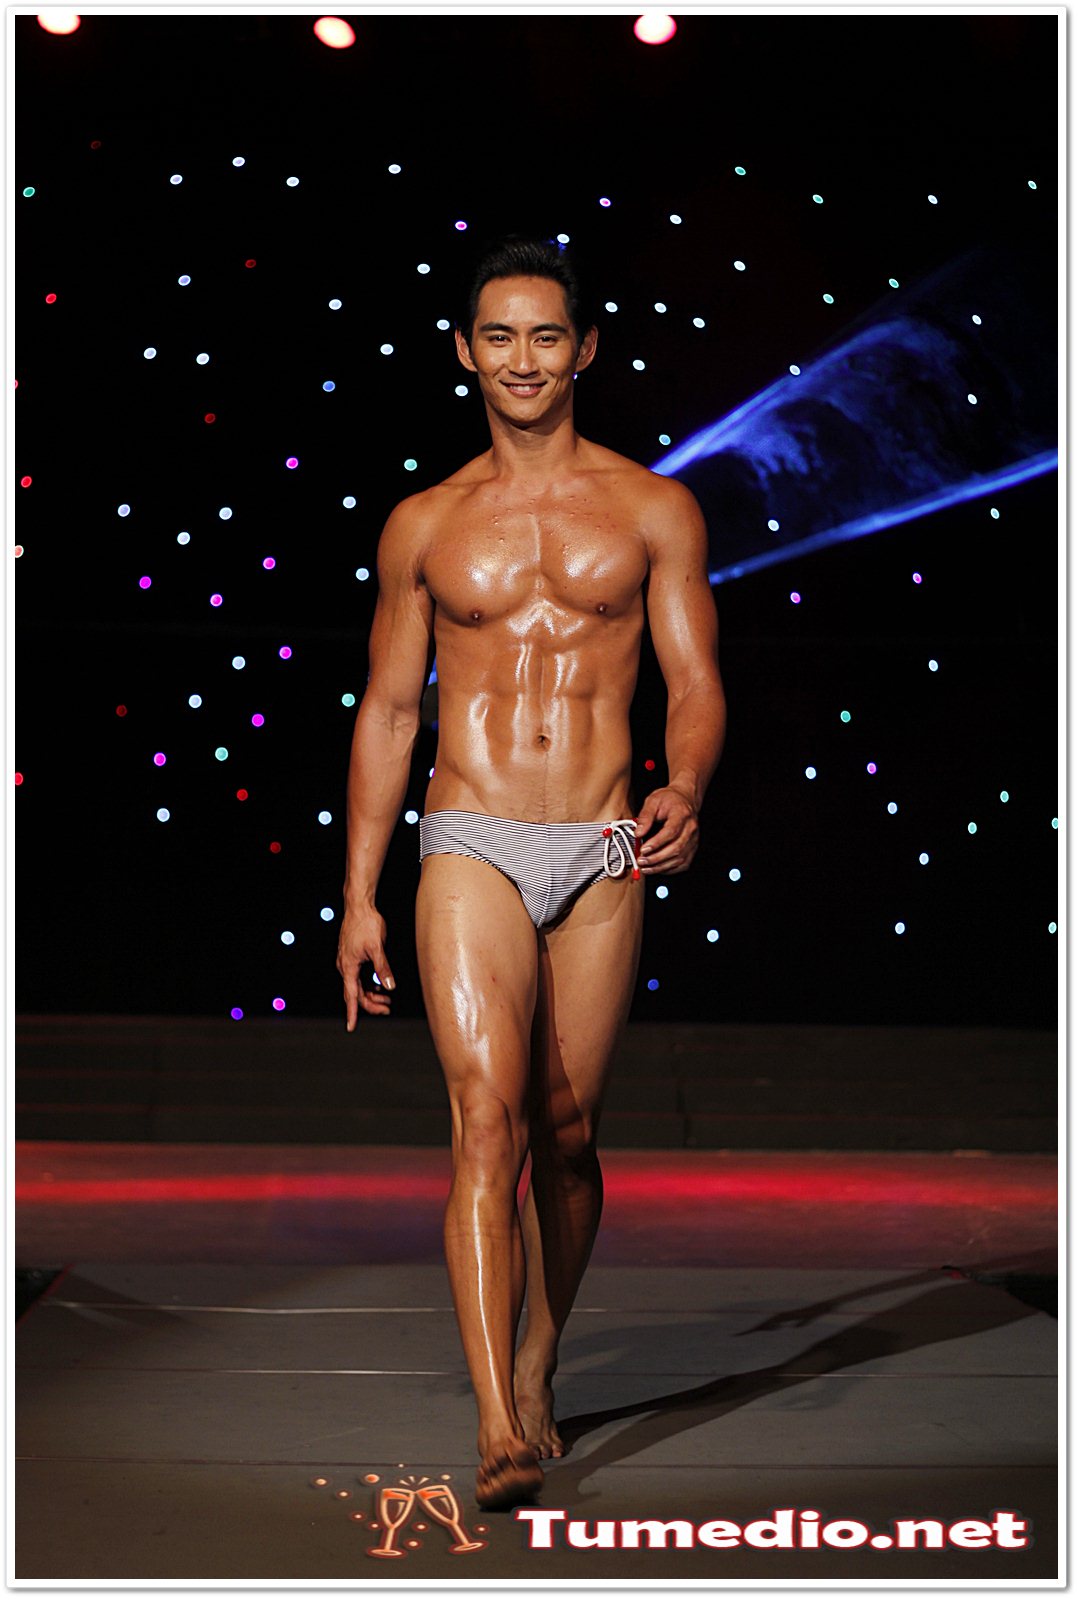 Re: Erick Jimenez (Dominican Rep) is Mister Universe Model 2012.